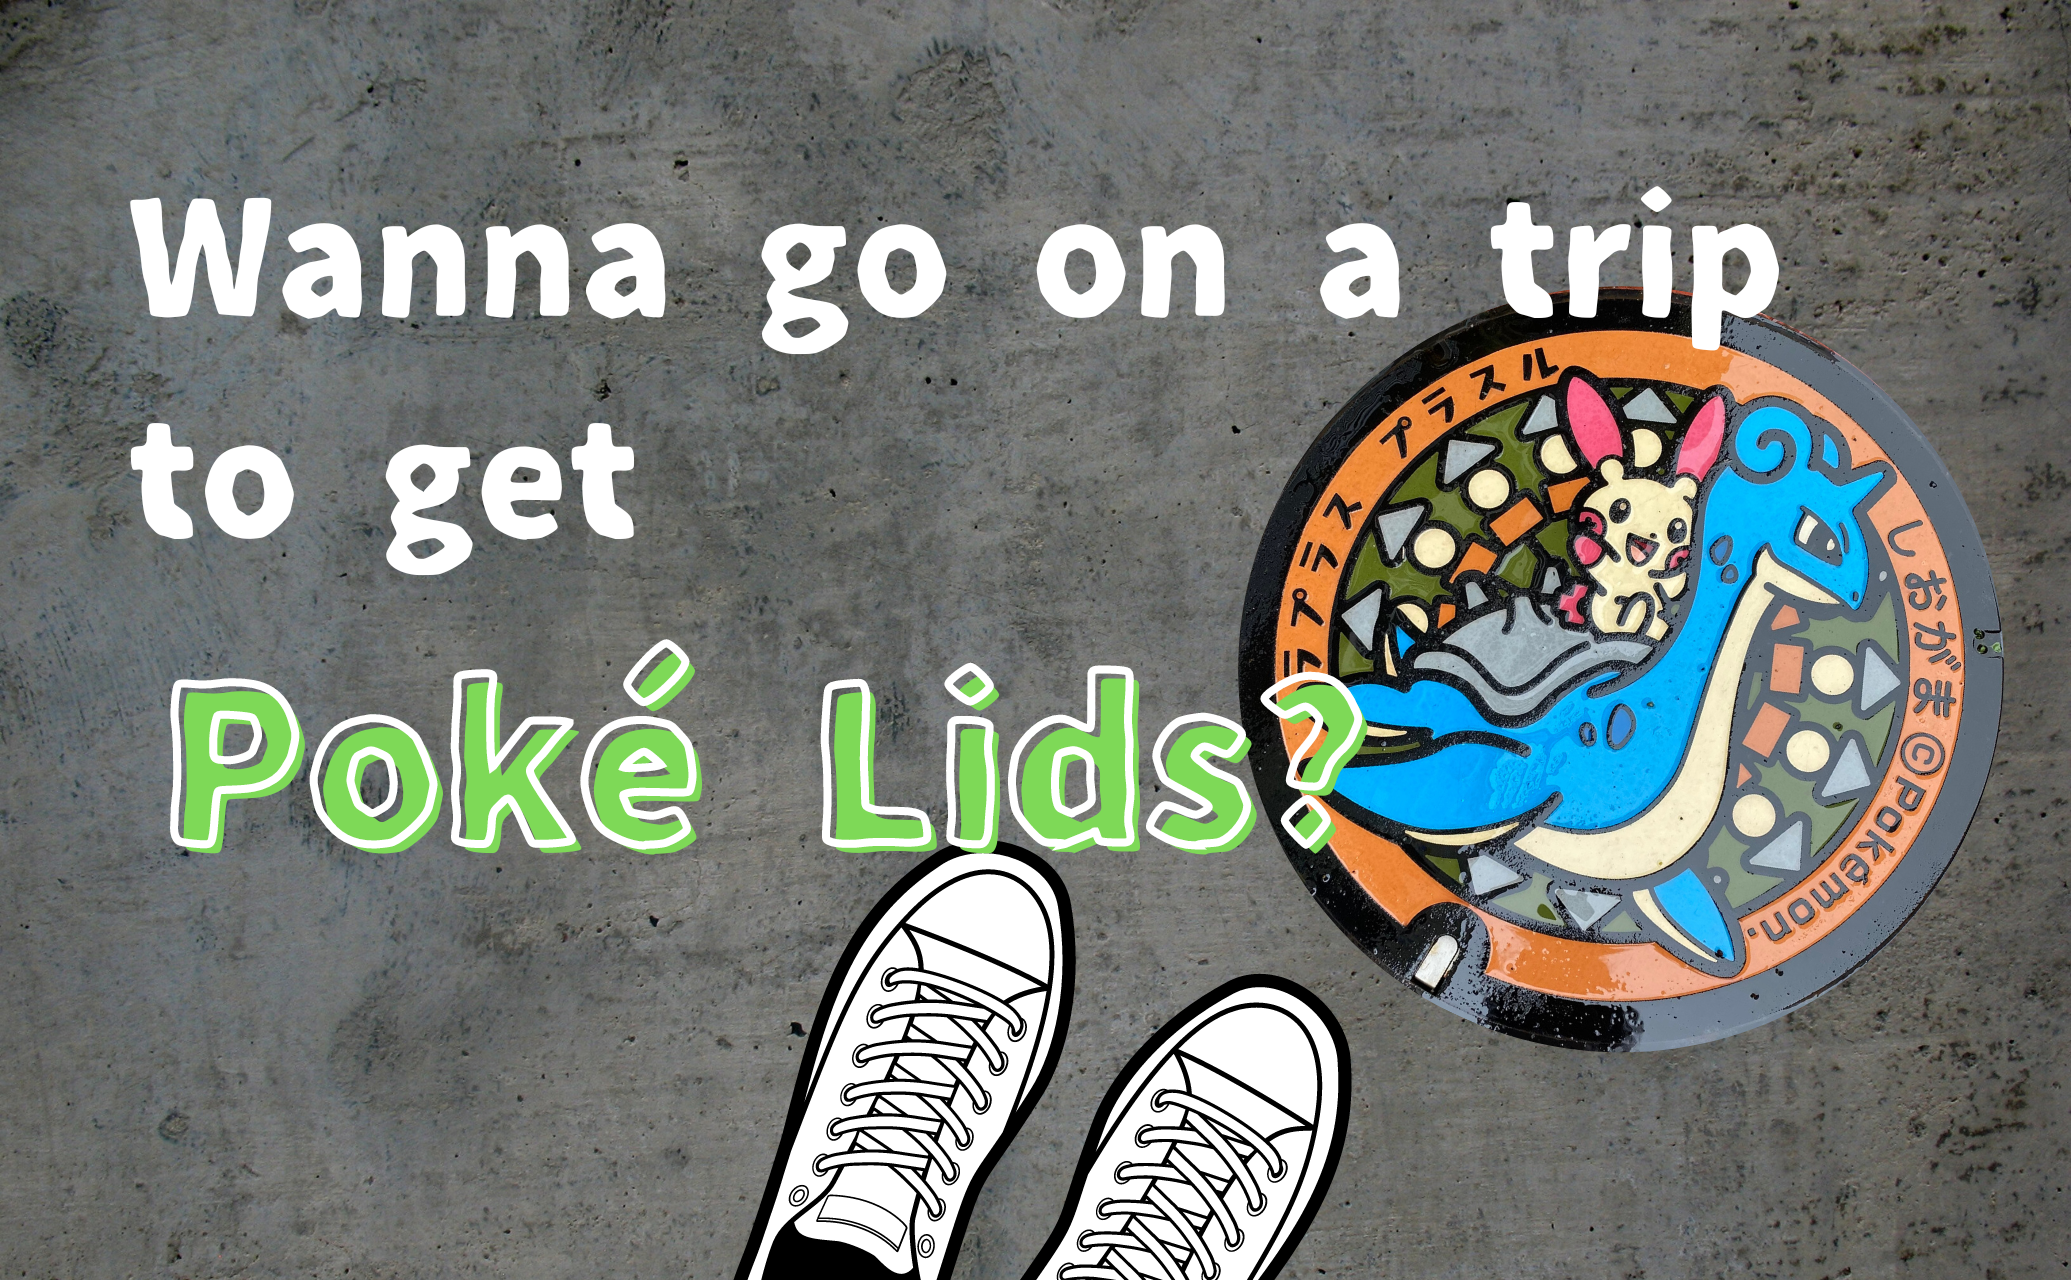 Wanna go on a trip to get Poke Lids?